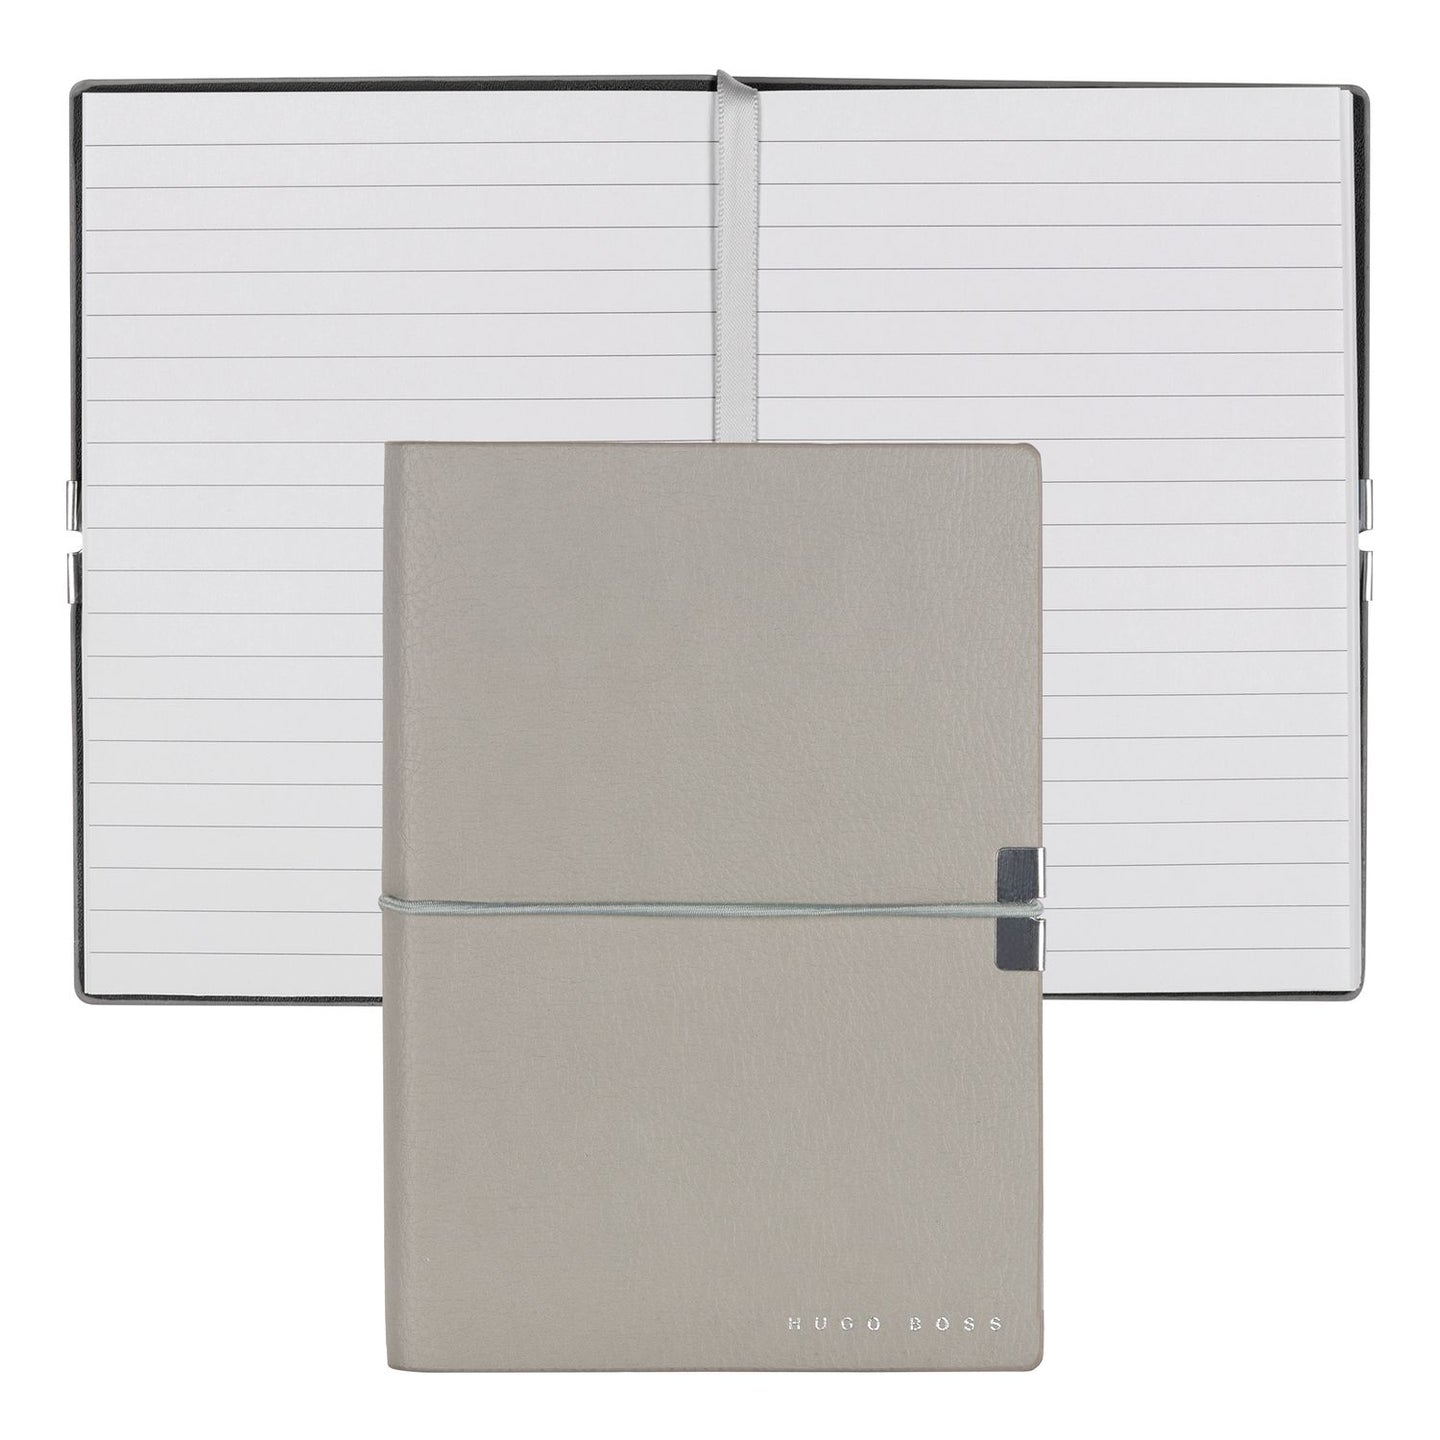 Hugo Boss Notizbuch A6 Elegance Storyline Grey Lined